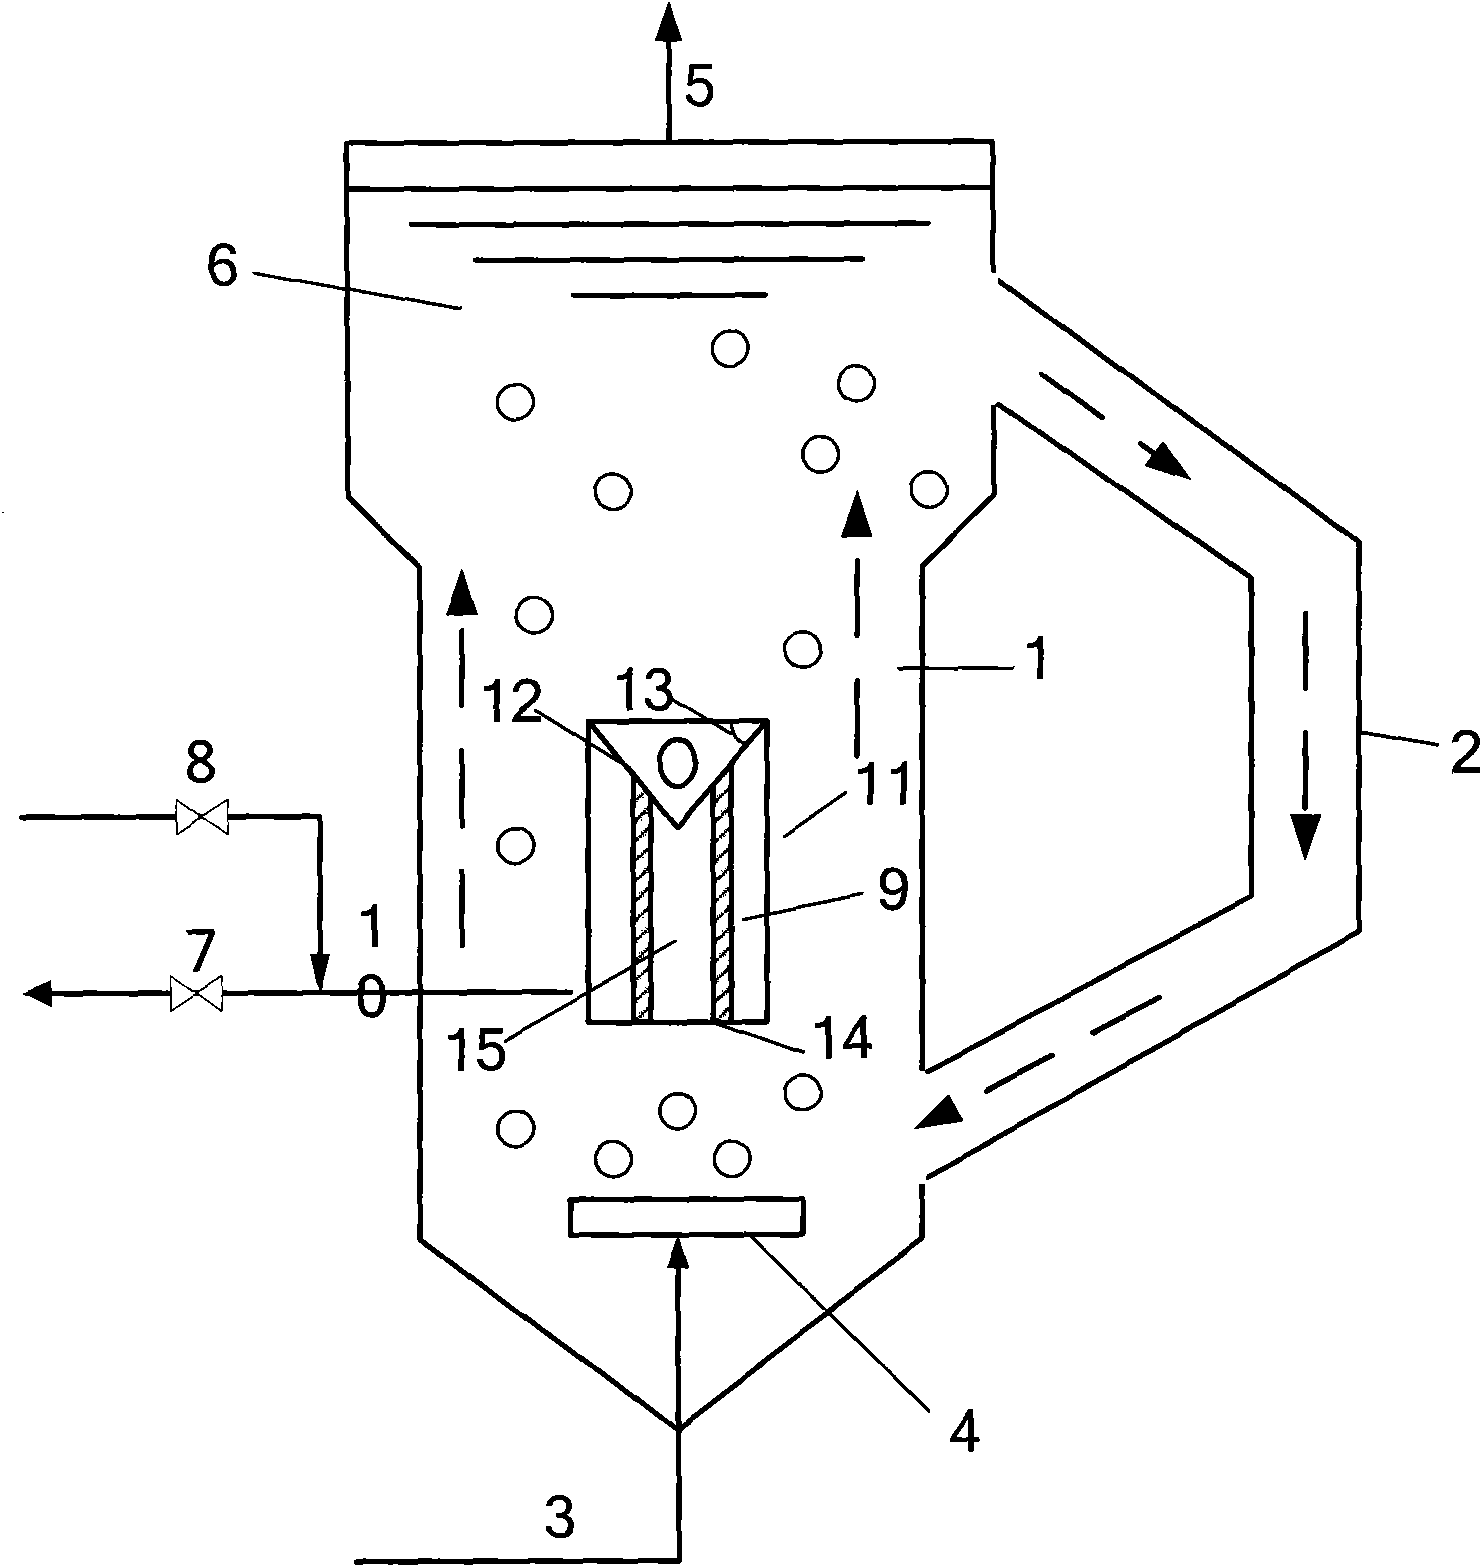 Application method of loop slurry reactor adopting novel filtration module